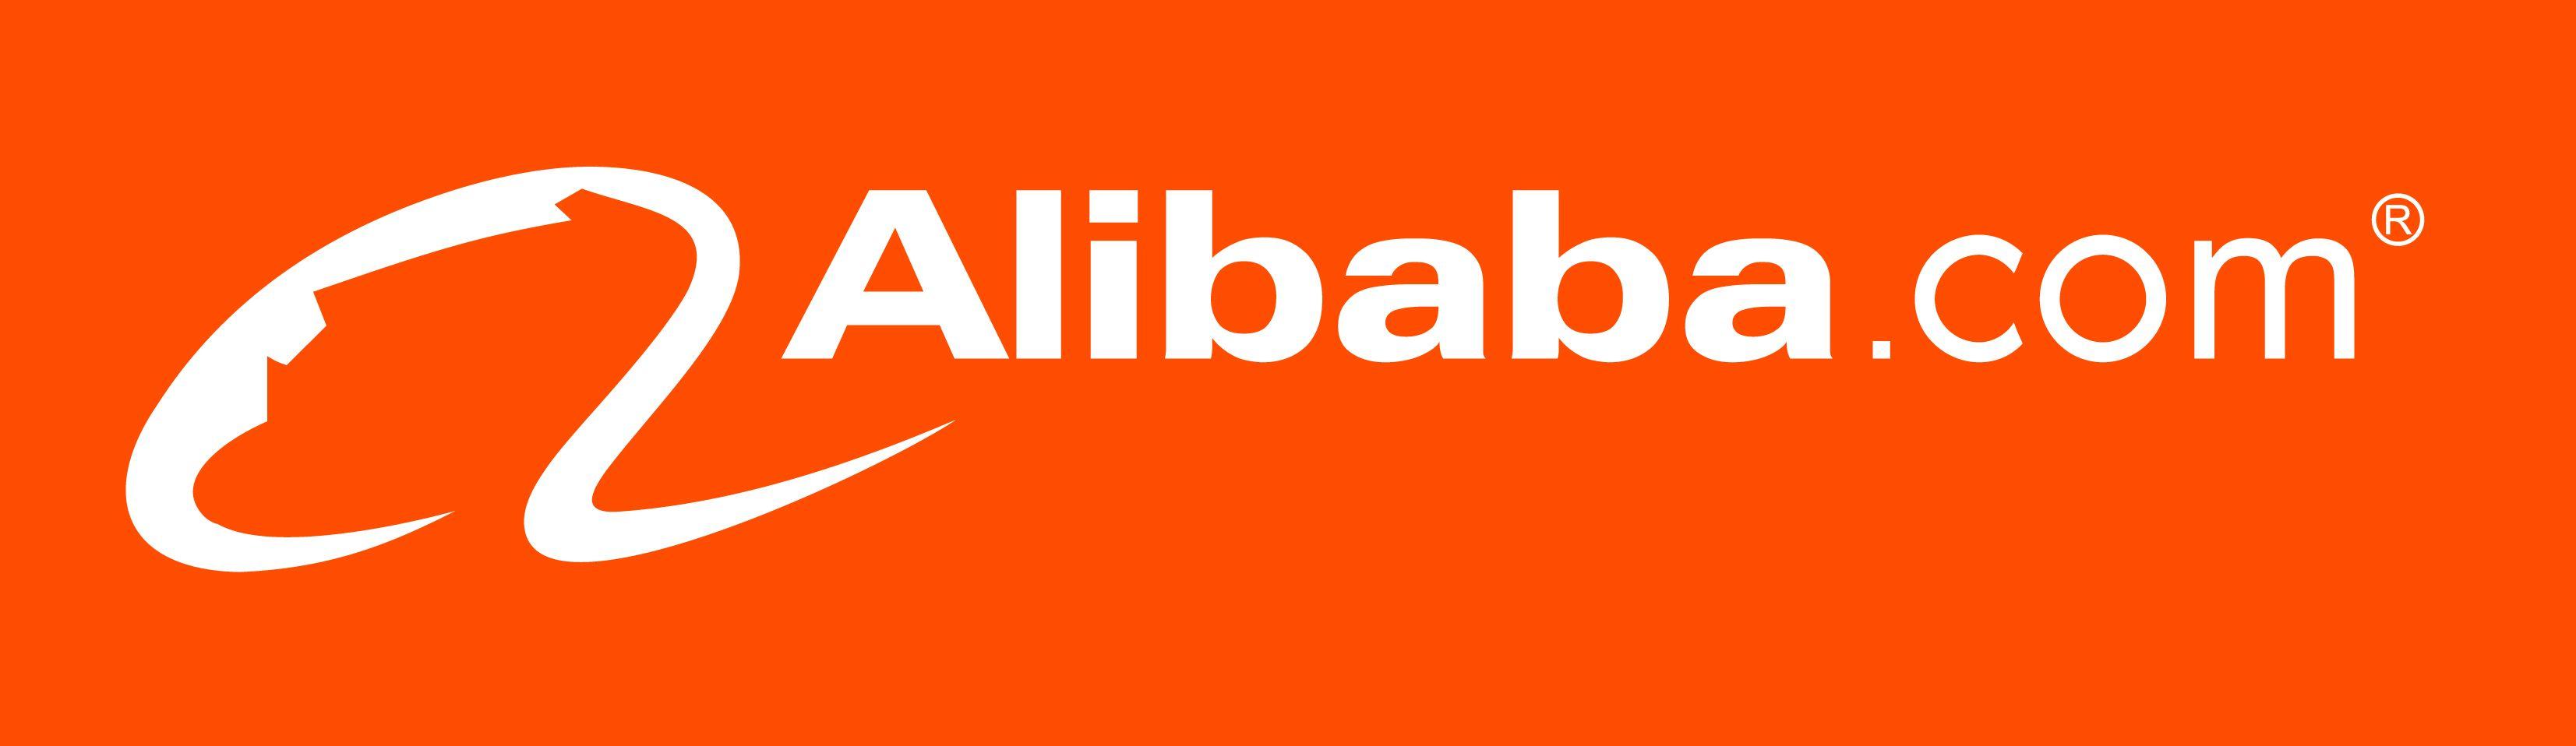 Alibaba.com Logo - Crazy Things You Can Buy On Alibaba.com